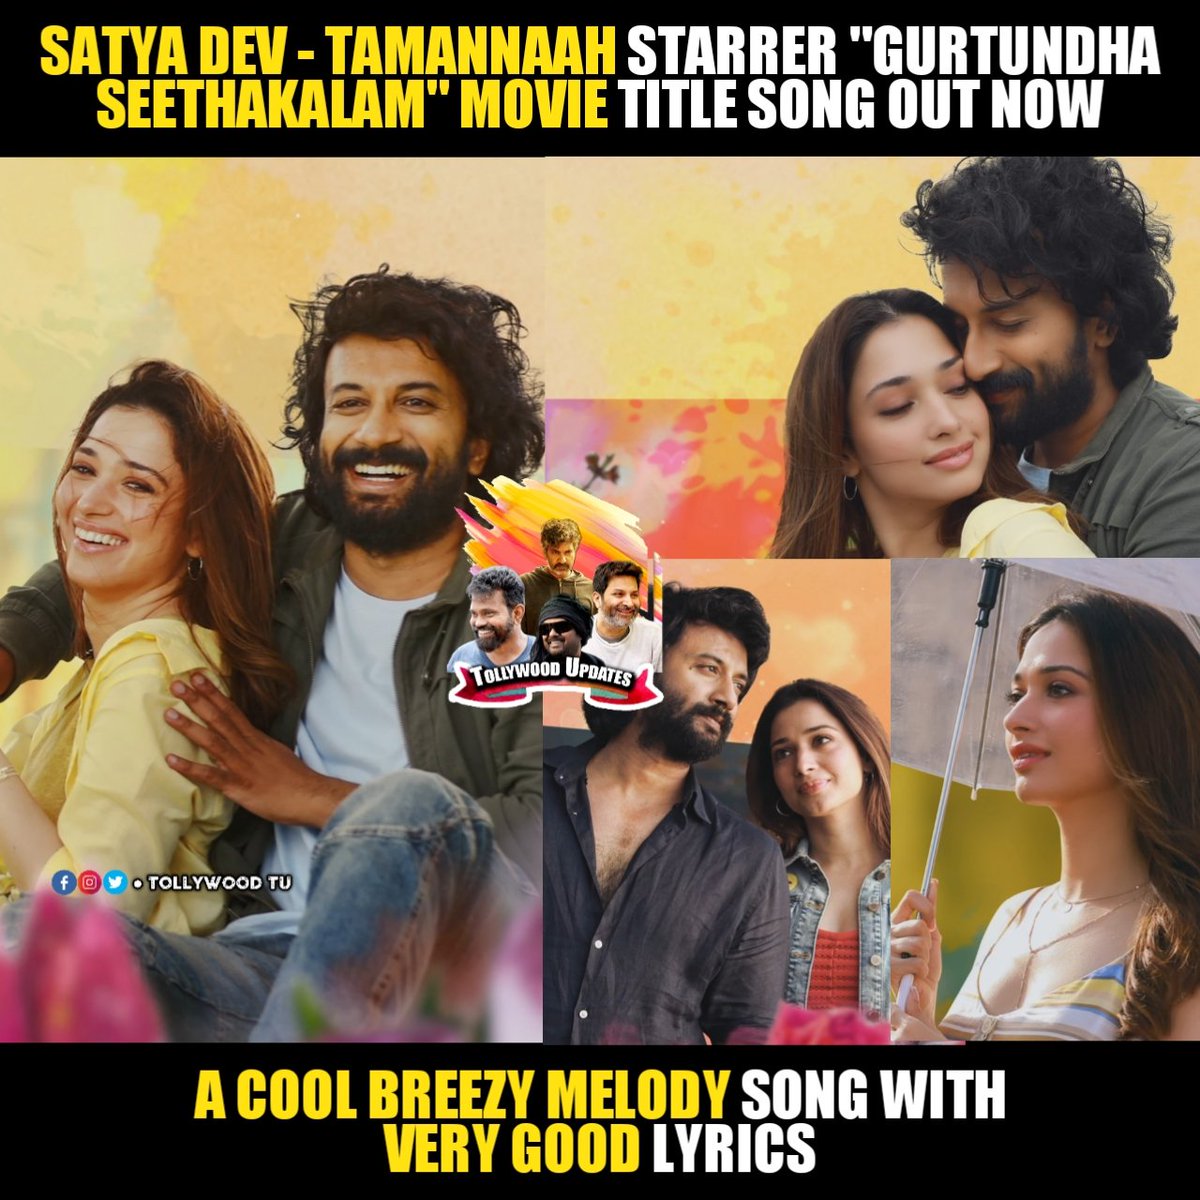 #GurtundaSeetakalam title song - youtu.be/Gpn3j8Qh230

It is an official remake of Kannada super hit film #LoveMocktail. 

#SatyaDev #TamannaahBhatia